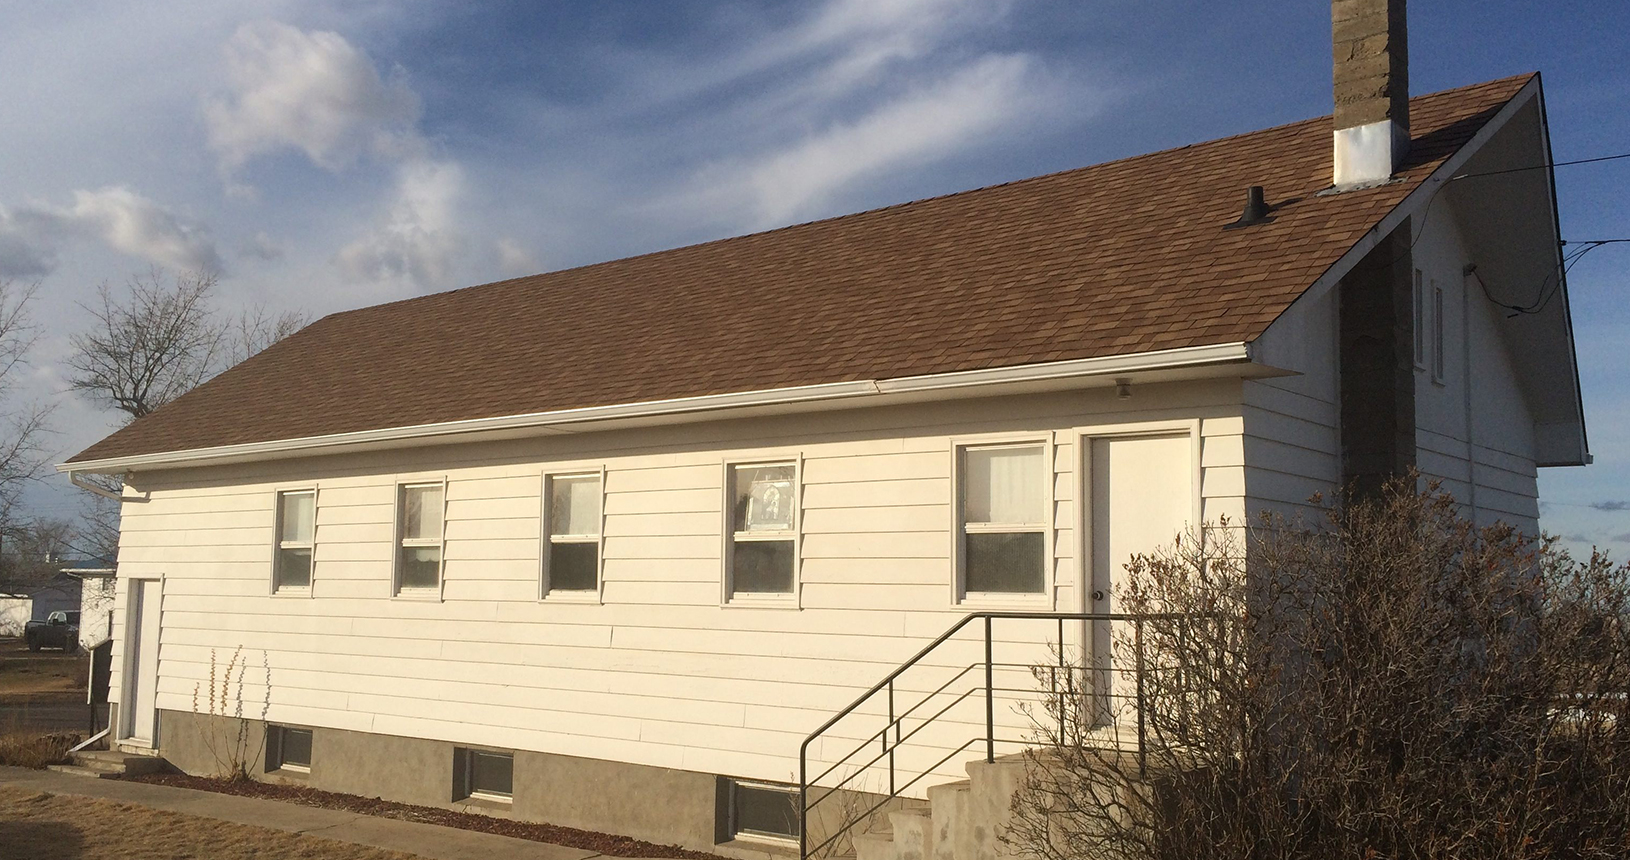 J&M Roofing Services: Asphalt Shingle Church Roof